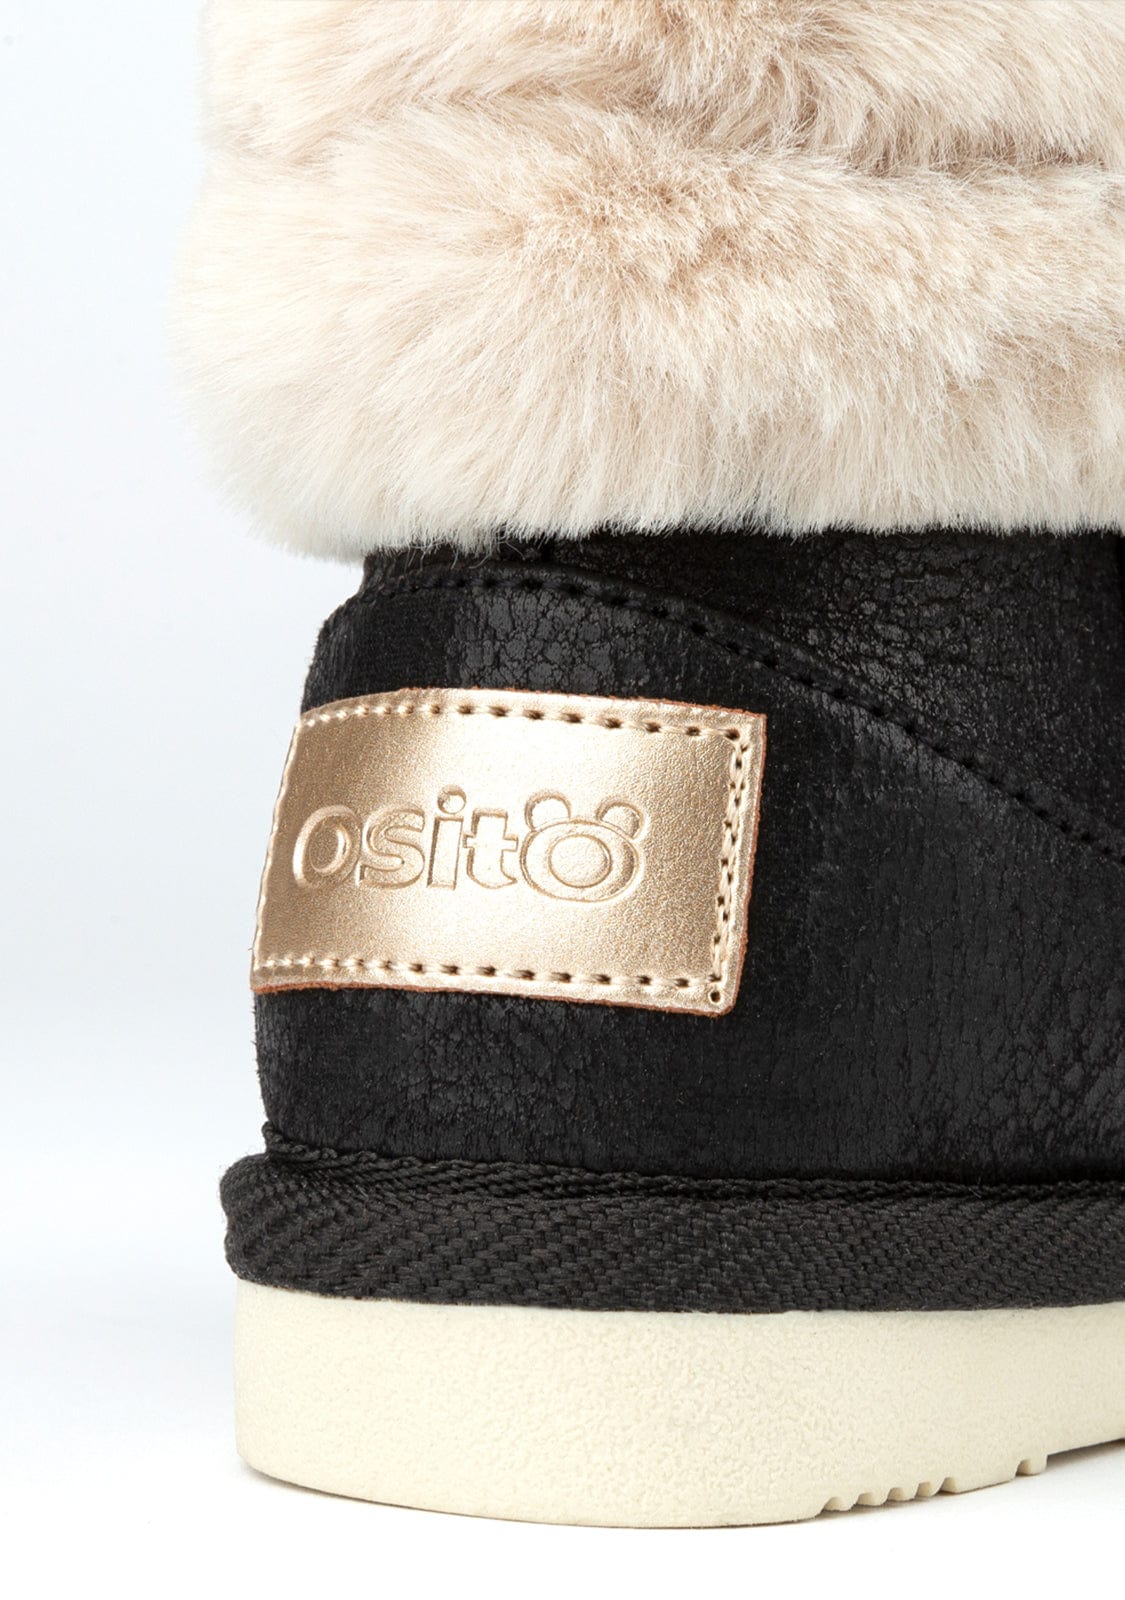 OSITO Shoes Baby's Black Aviator Fur Australian Boots